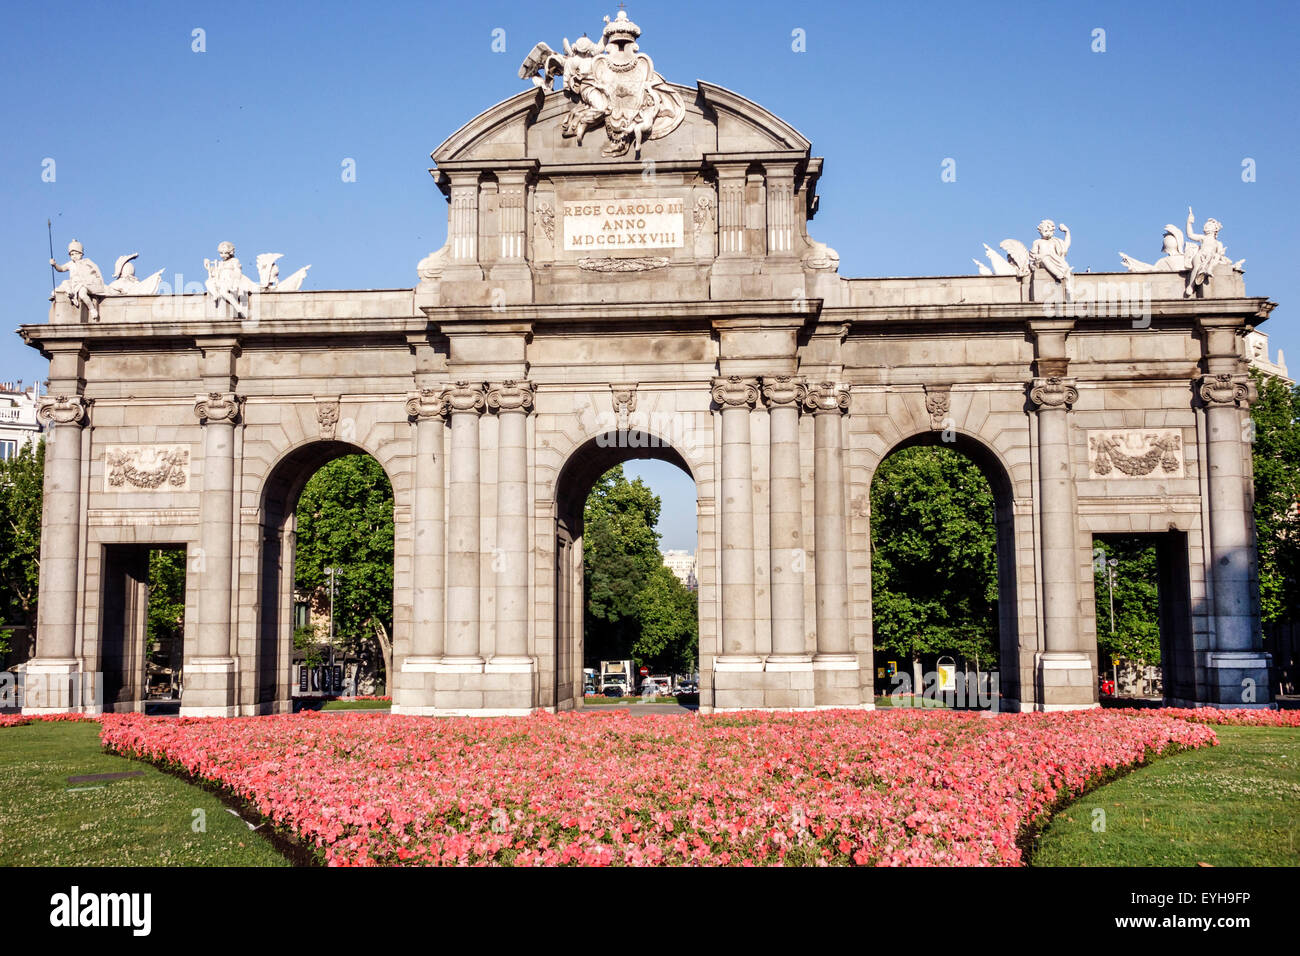 Madrid Spain,Recoletos,Salamanca,Puerta de Alcala,Calle de Alcala,Plaza de la Independencia,monument,Francesco Sabatini,neoclassical architecture,Spai Stock Photo